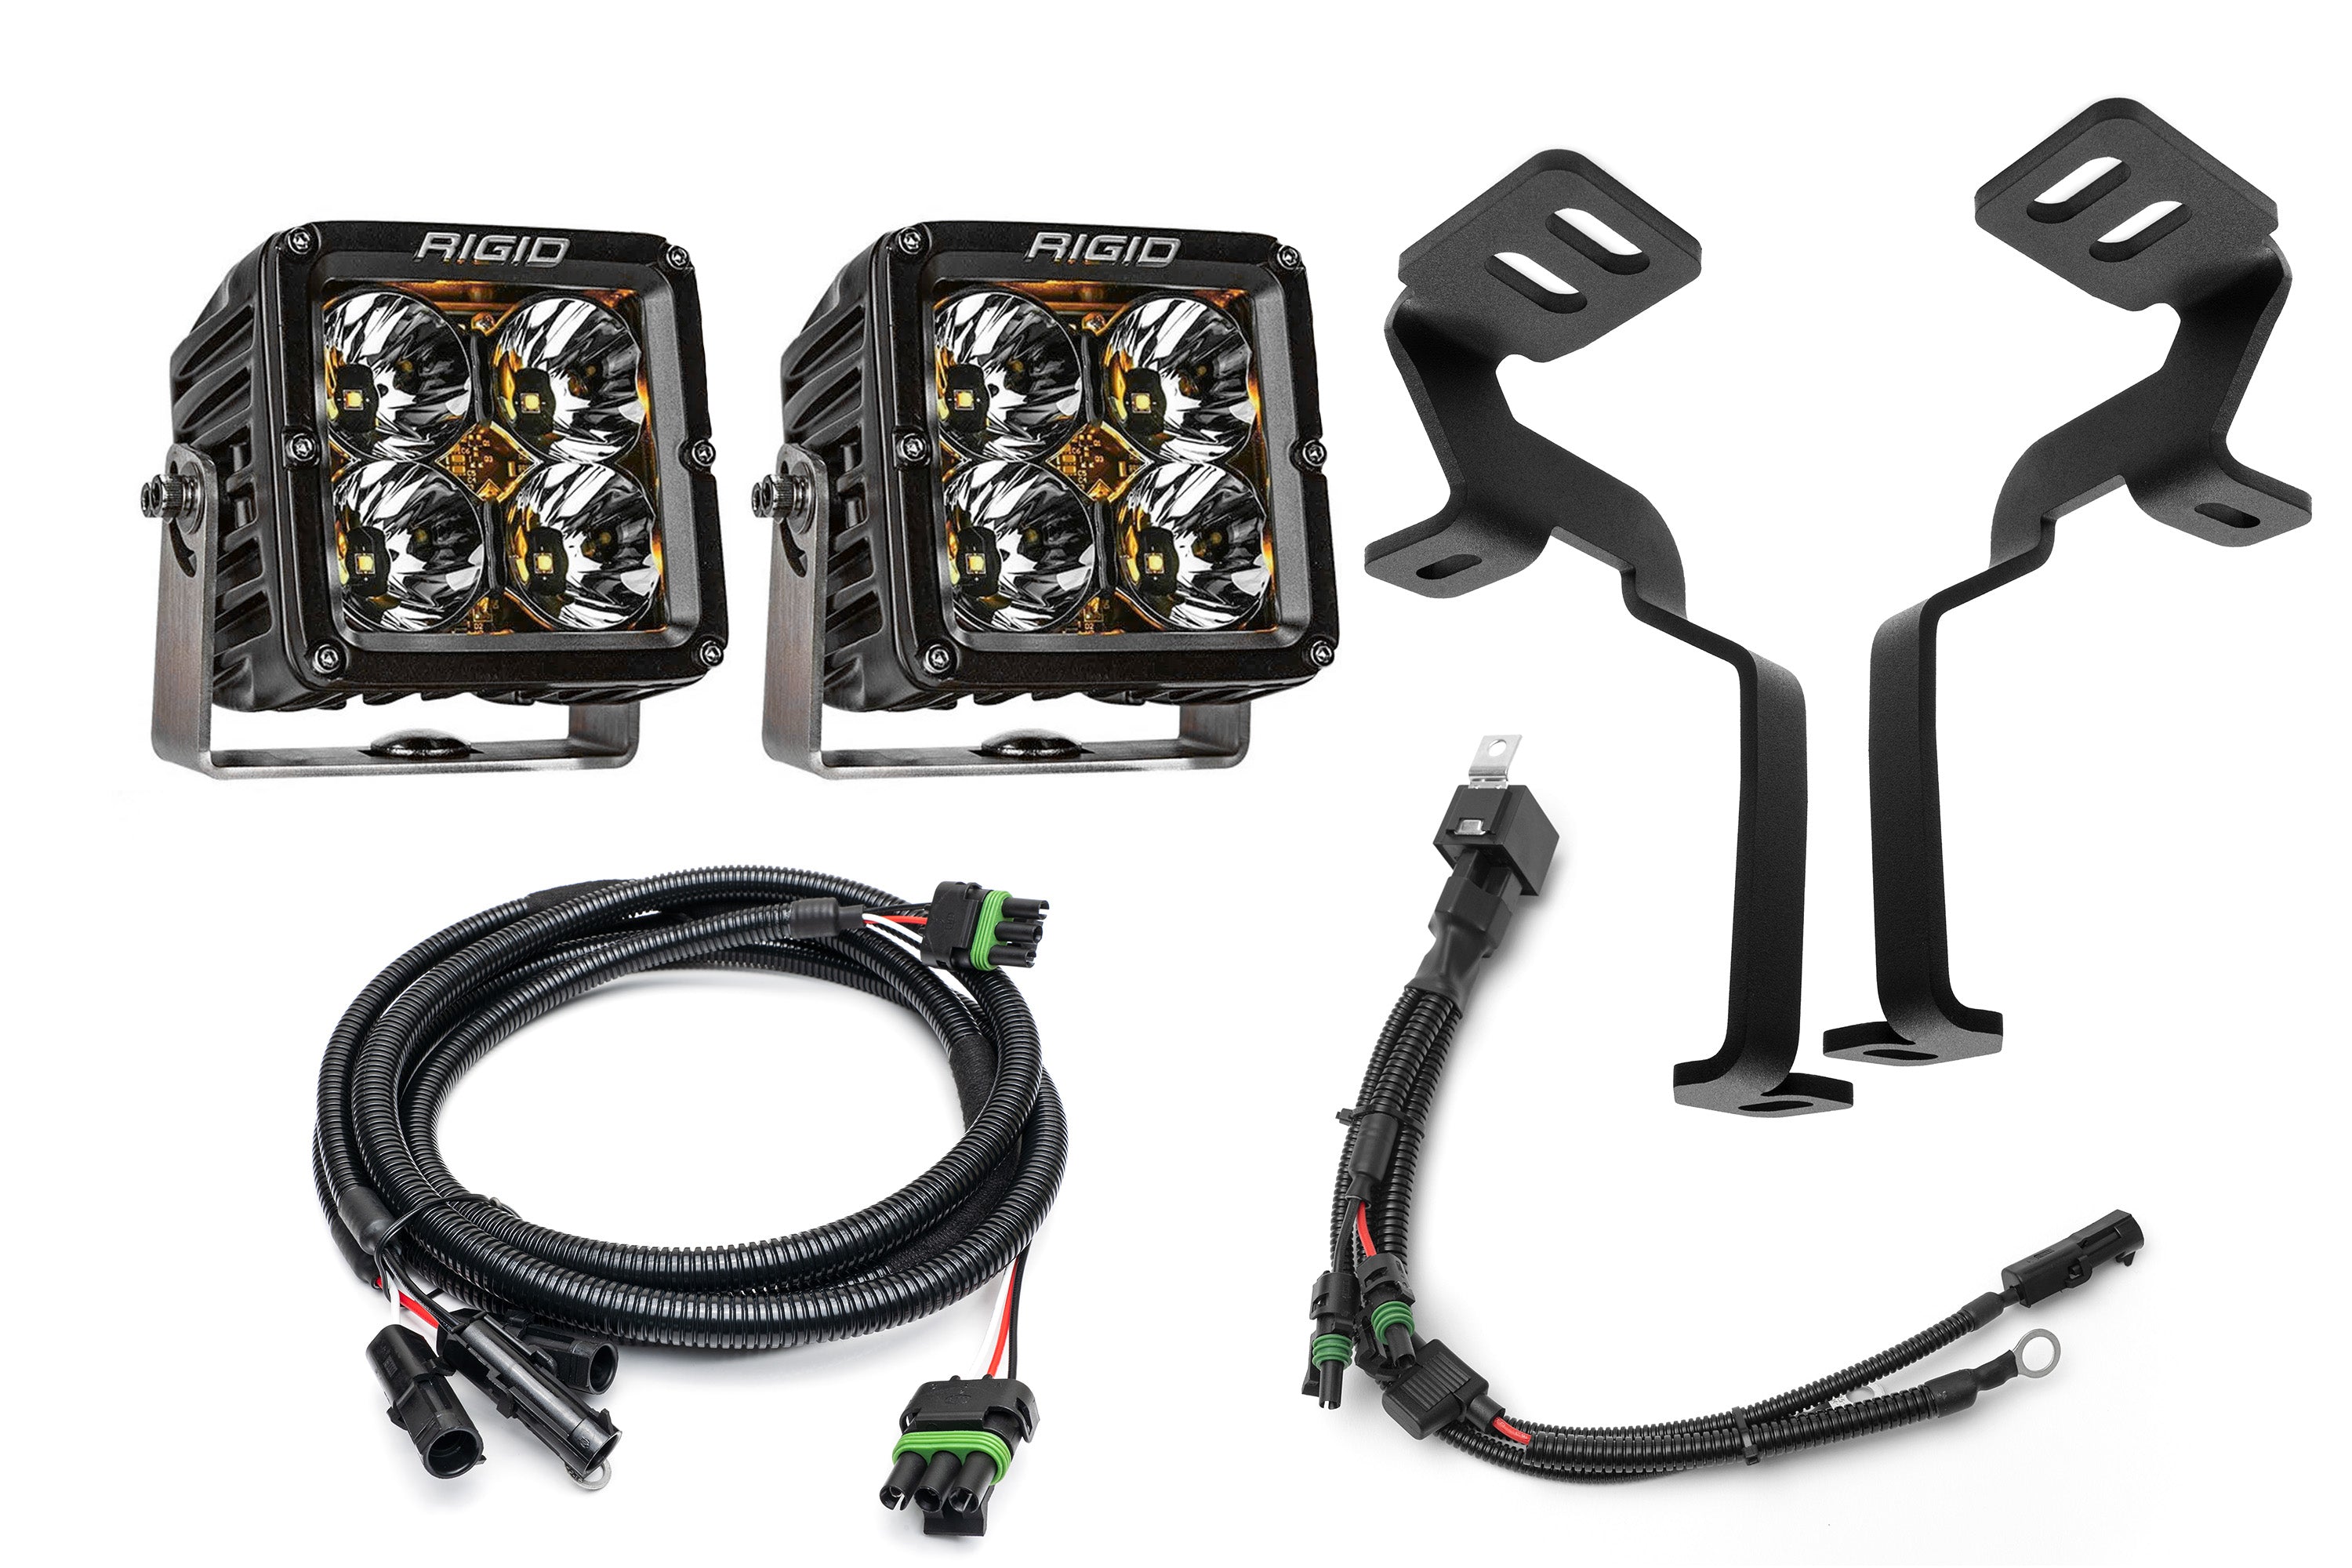 SPV Parts Rigid XL Series Radiance & Pro - SPV Parts A - Pillar (Ditch) Light Kit for Ford 2021+ Raptor/Tremor, F-150